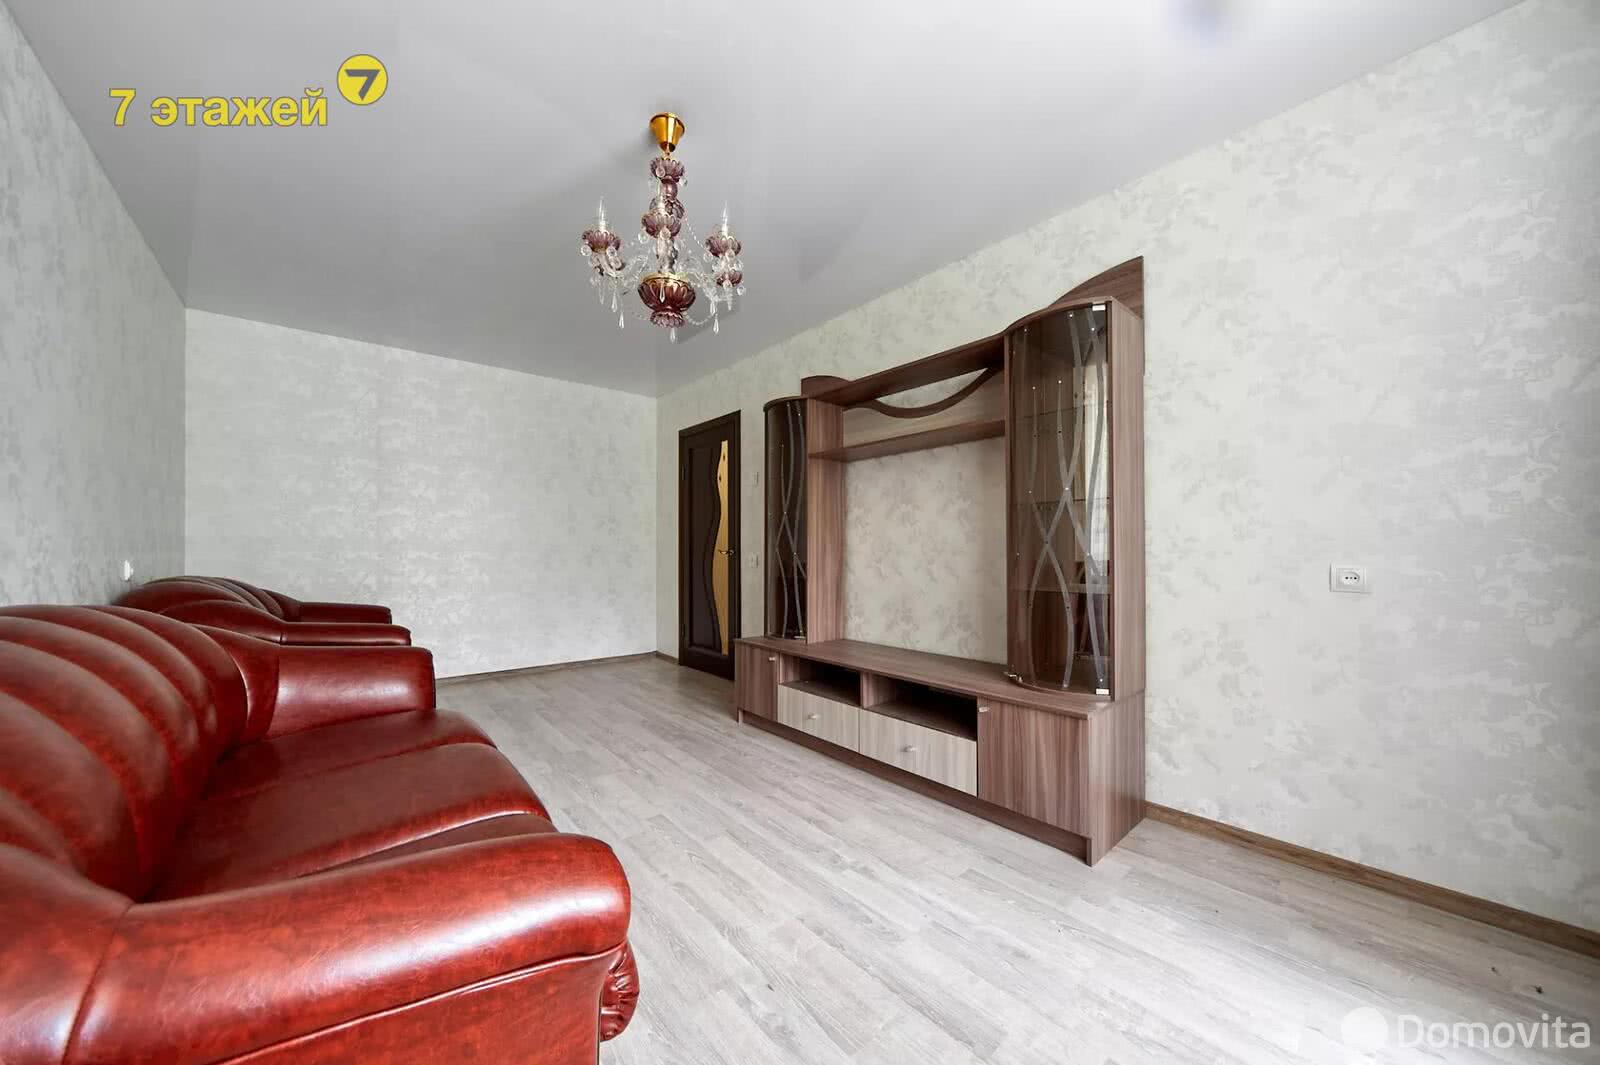 квартира, Лесной, ул. Александрова, д. 17, стоимость продажи 187 891 р.